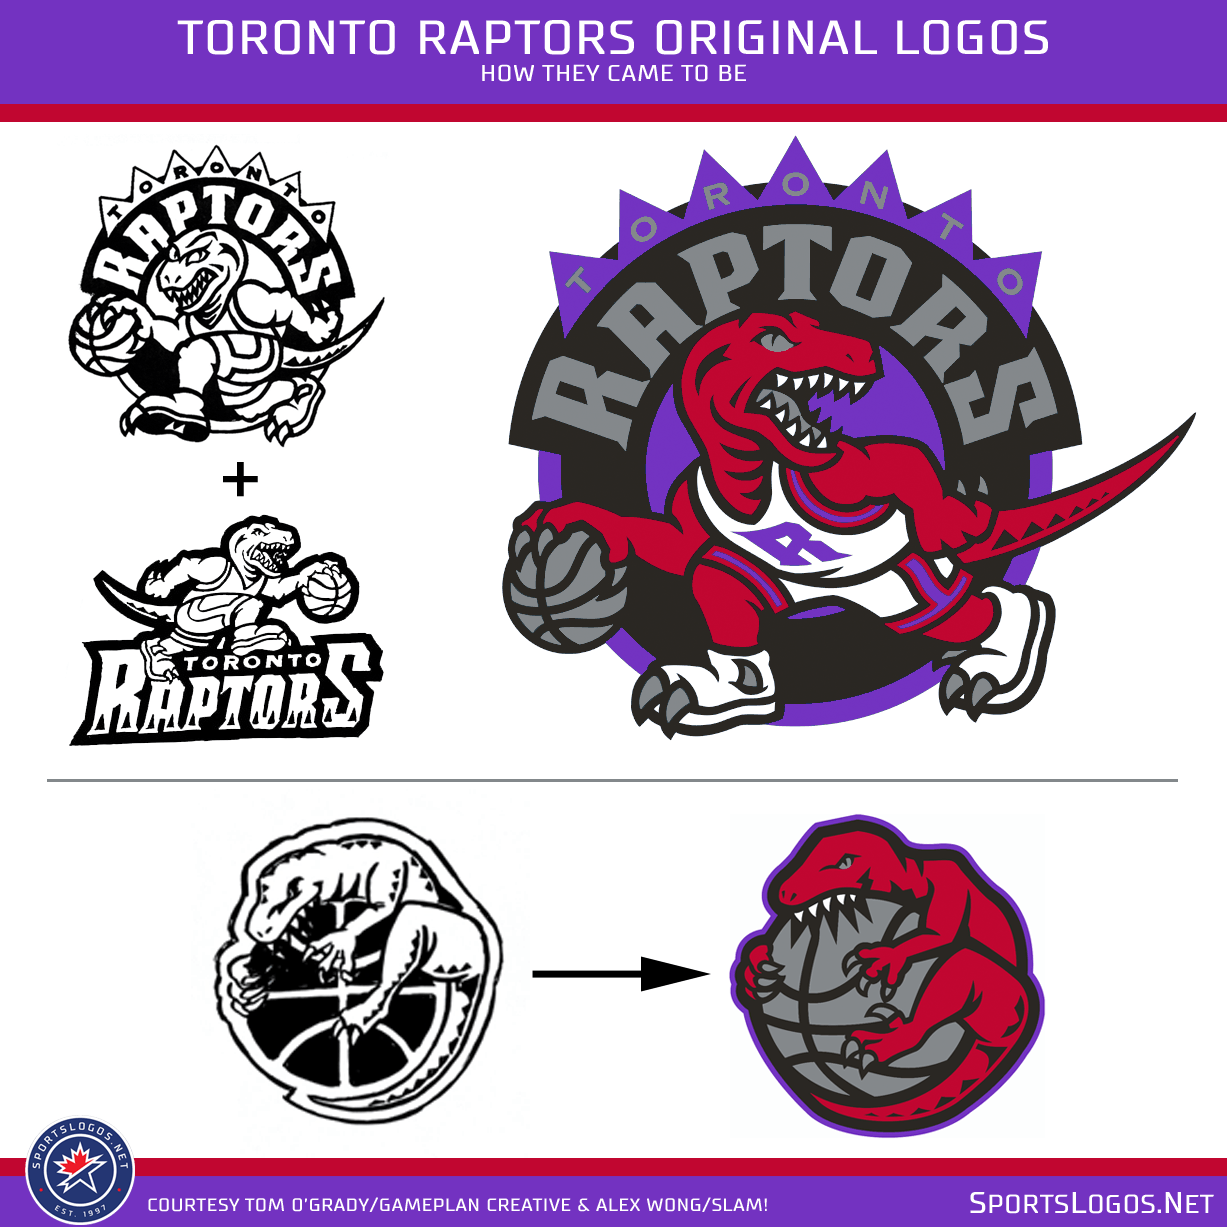 Toronto Raptors Logo - A Look at Some Original Proposed Toronto Raptors Logos. Chris